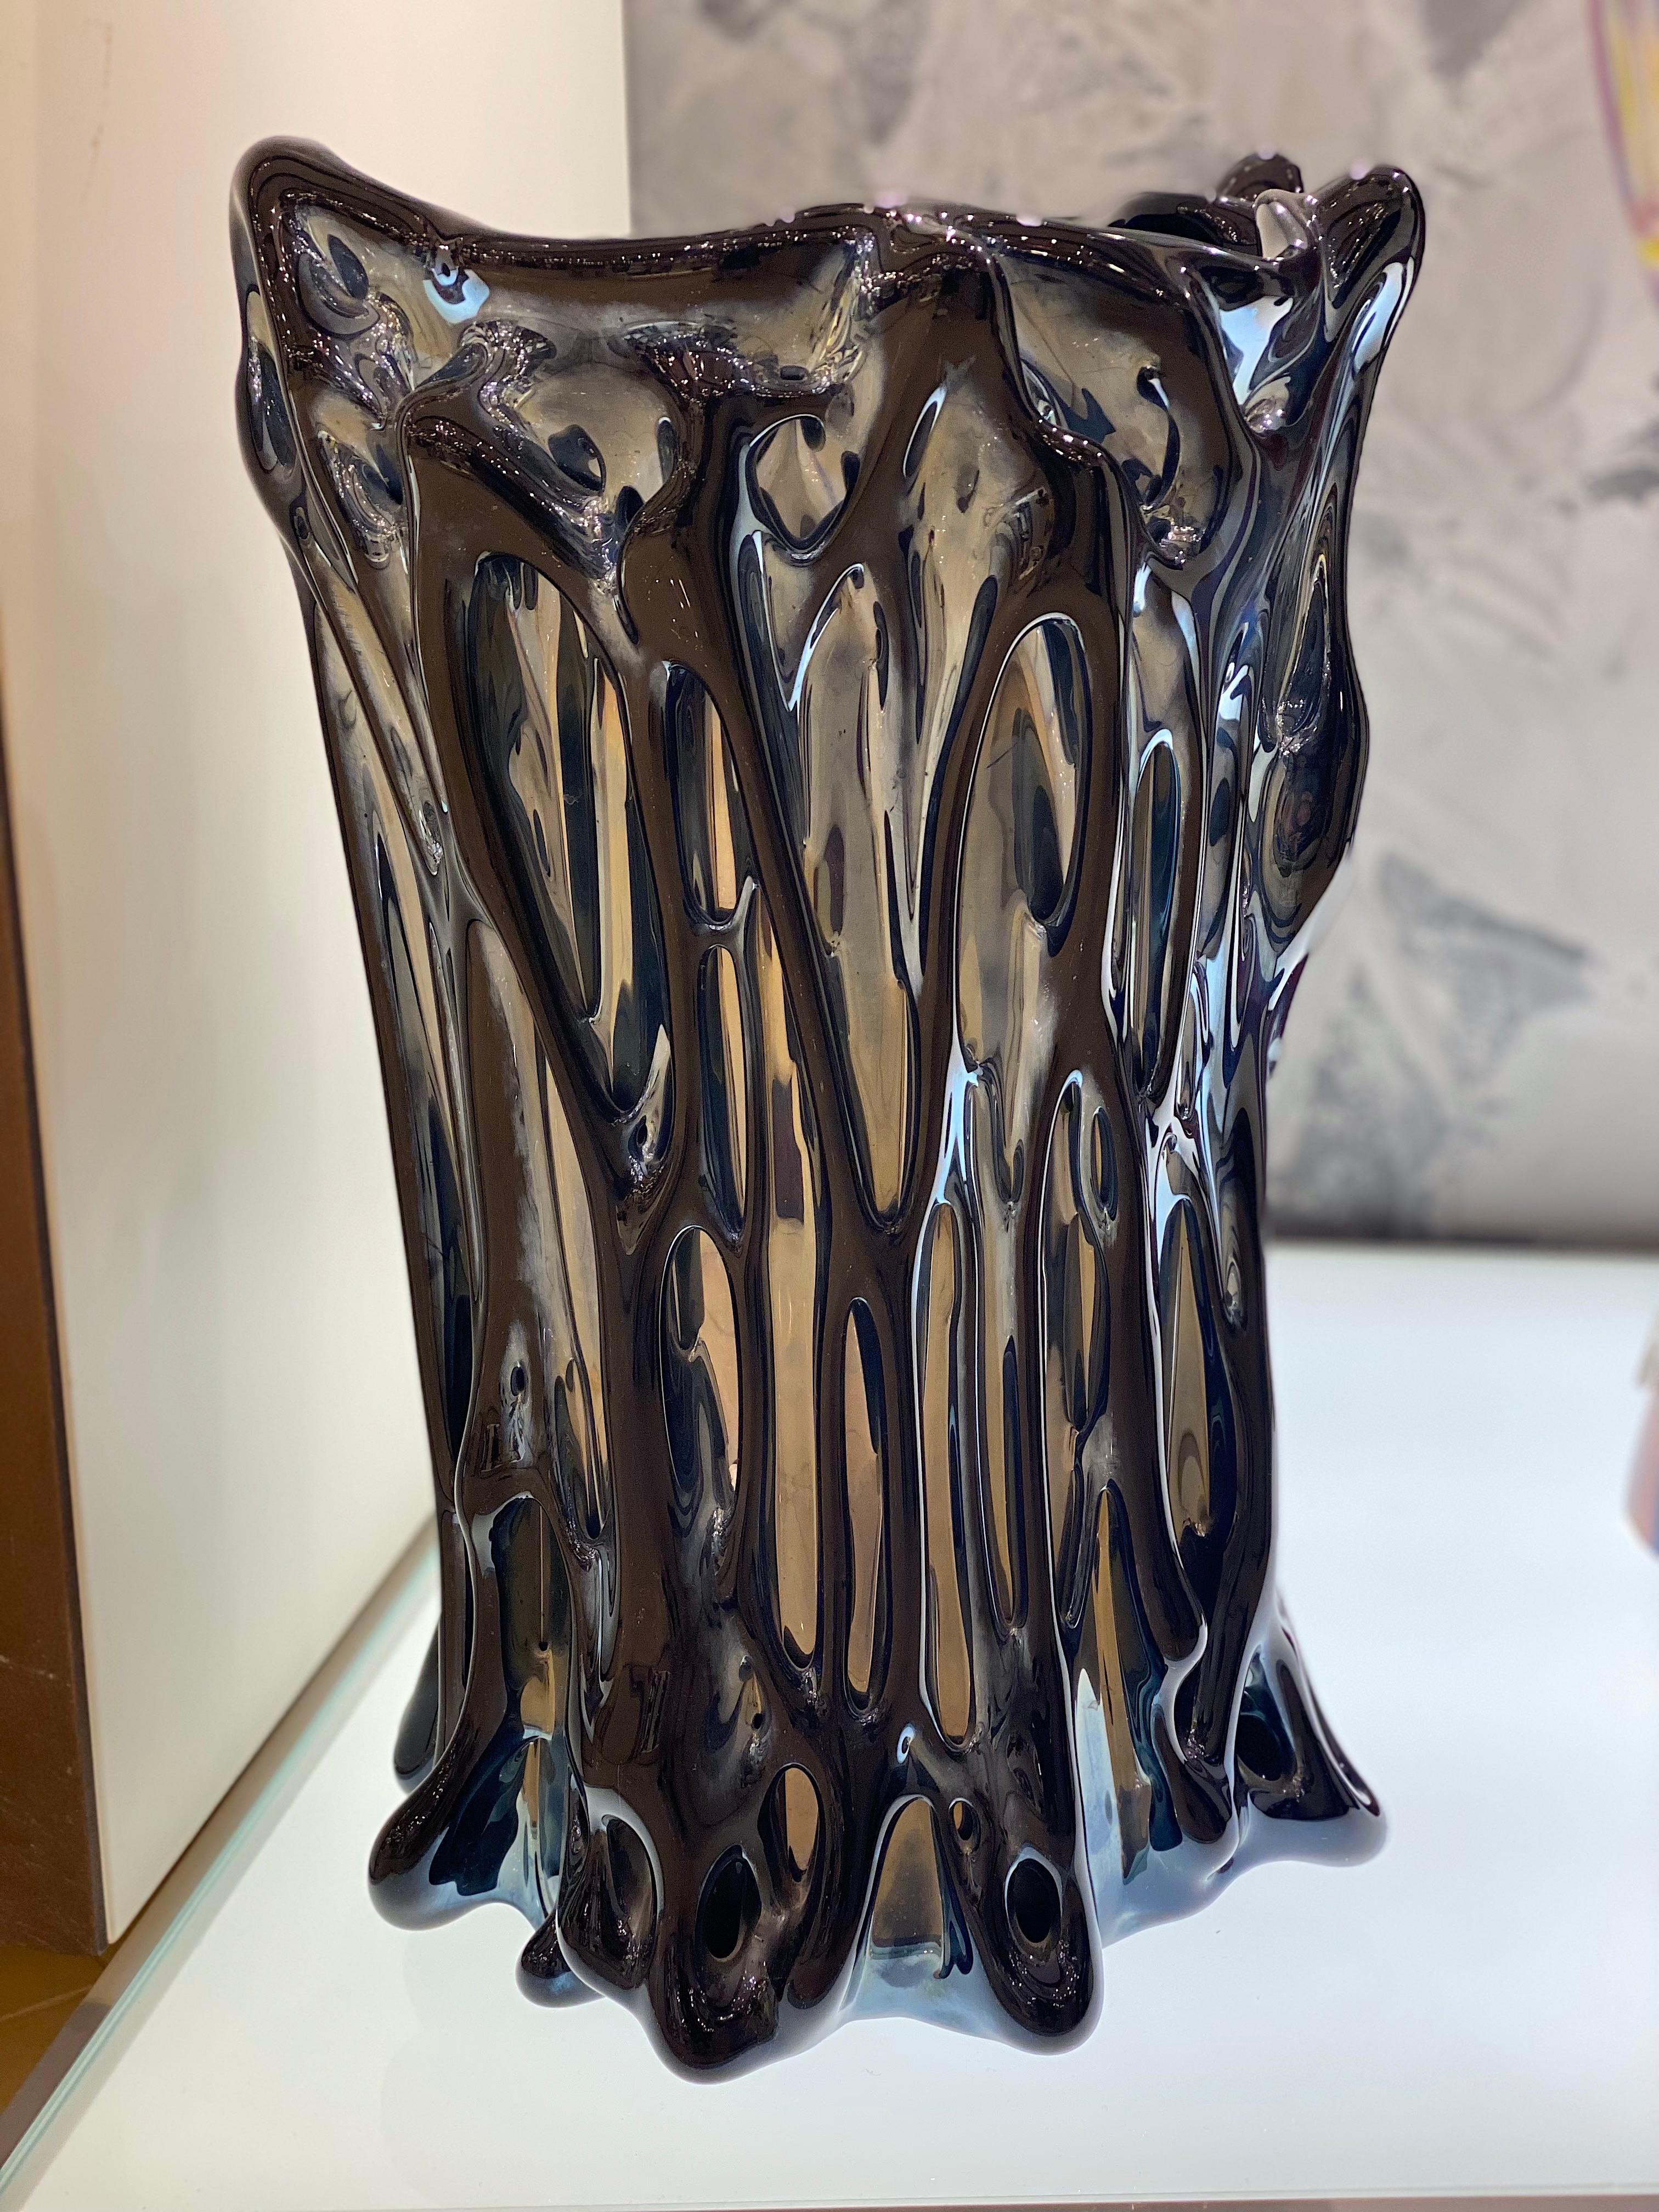 Exceptional Modern unusual black iridescent handblown Murano glass vase in excellent condition.
Masterpiece made by Venetian Maestro.